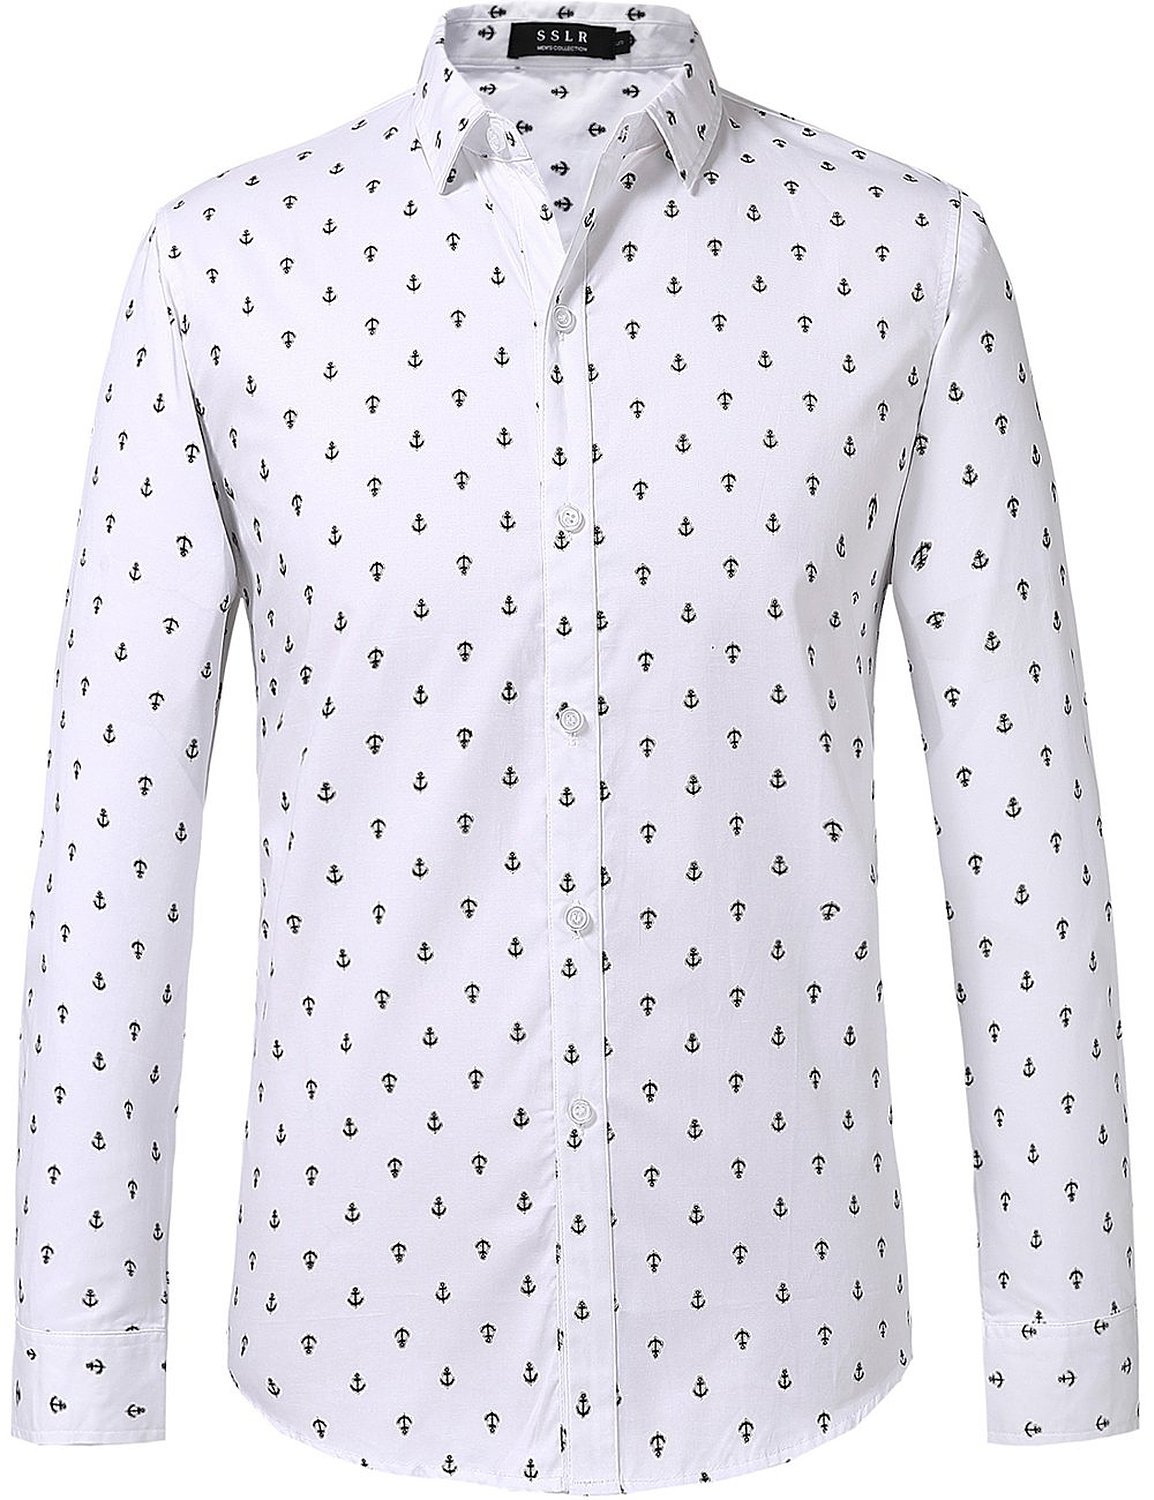 SSLR Men's Spring 100% Cotton Printing Long Sleeve Shirts